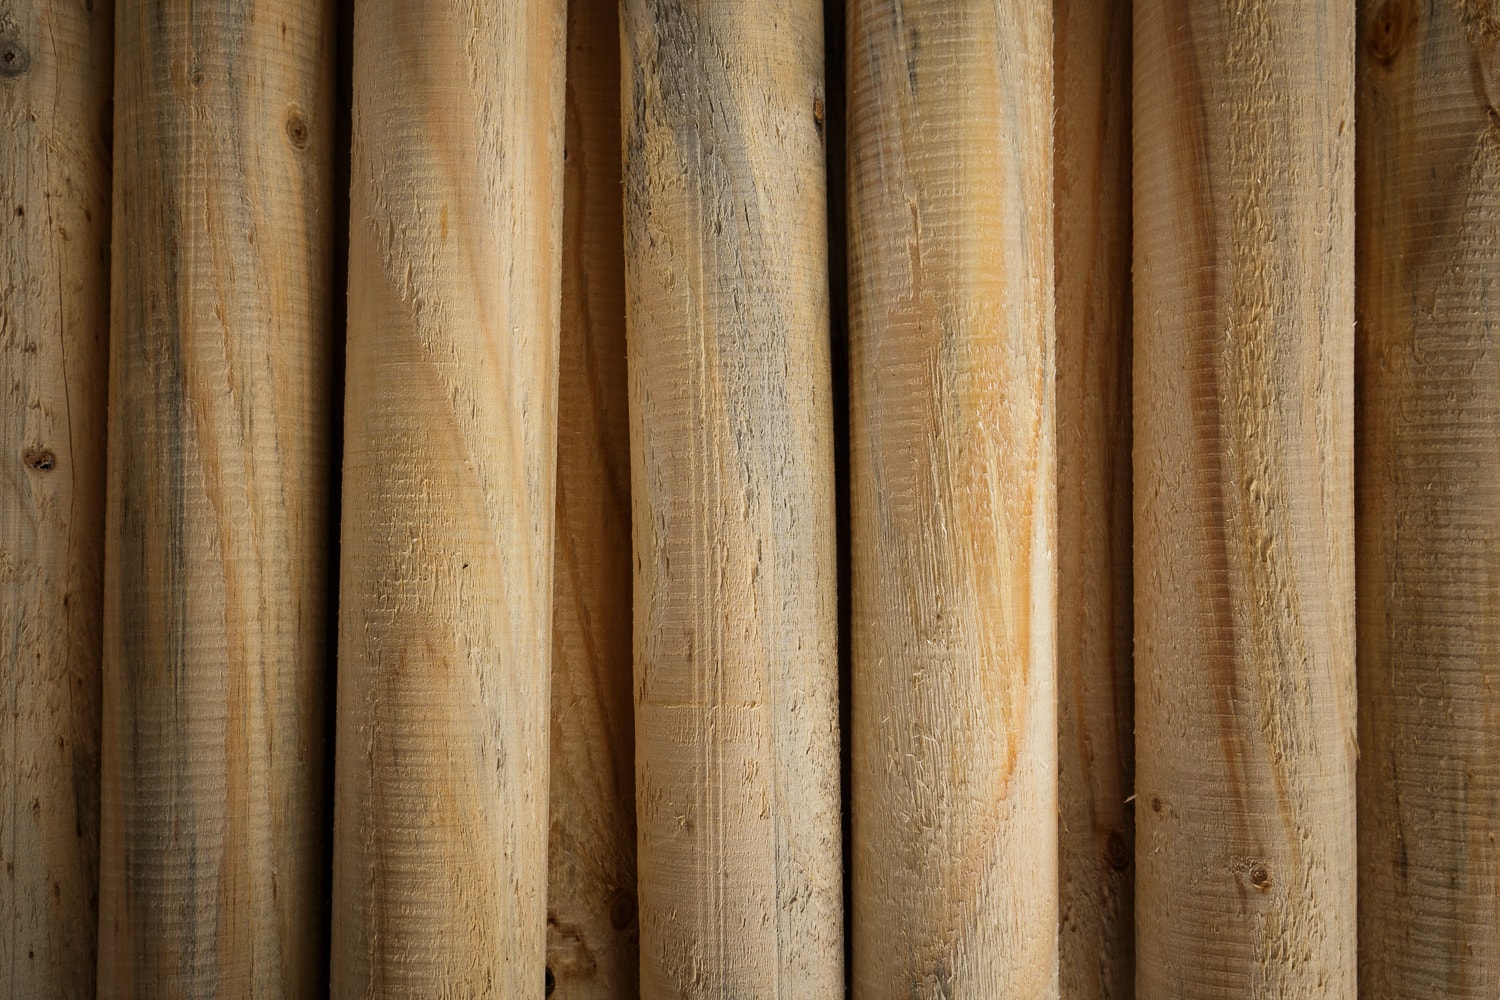 Postes de madera 3 metros - Madera Hogar